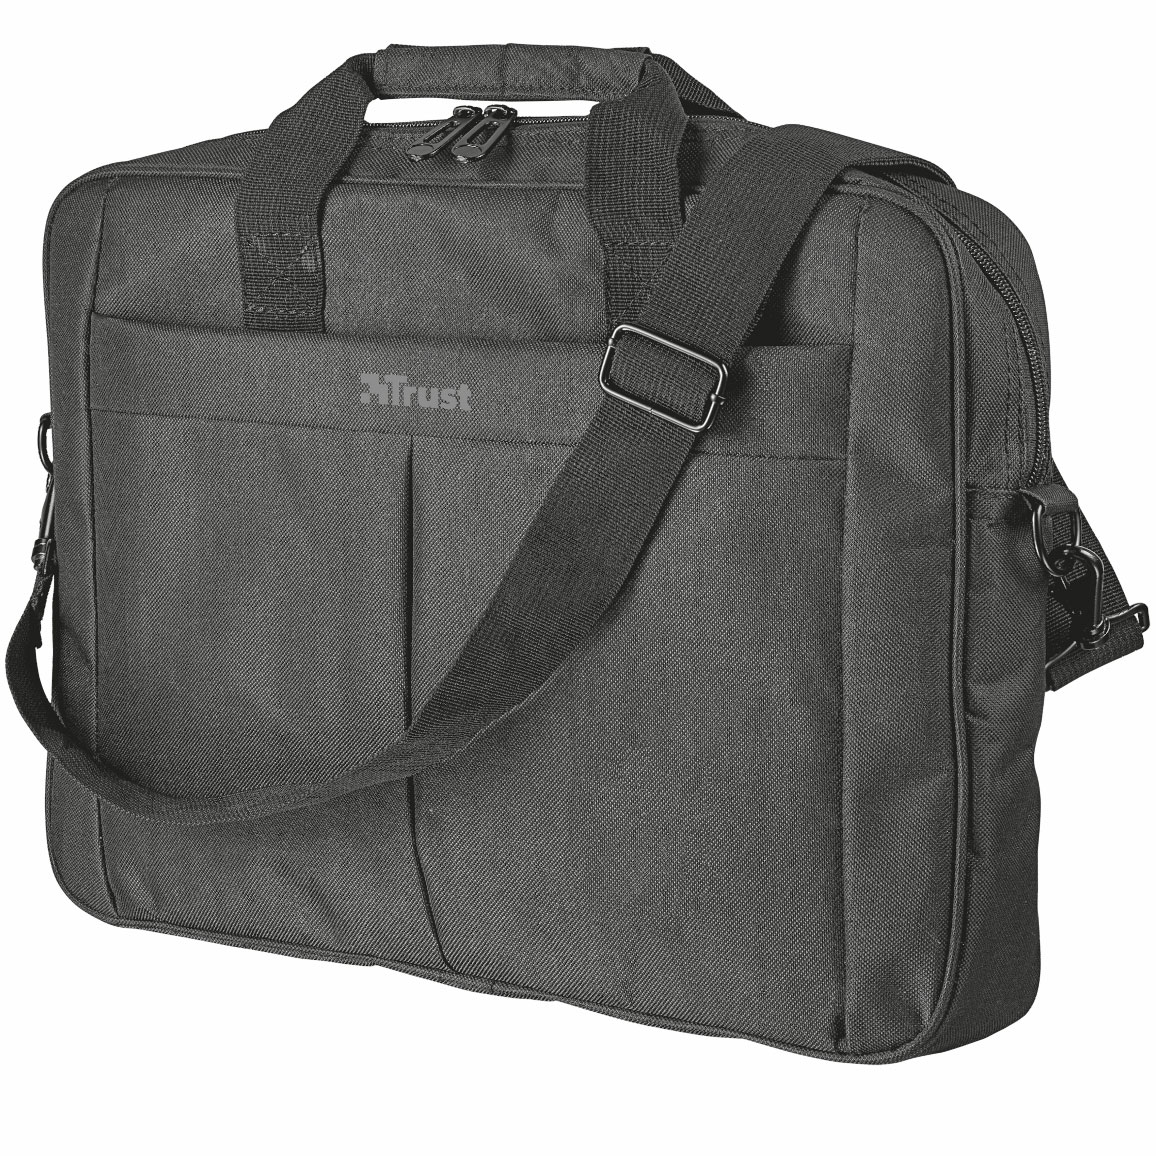 Trust: Primo Carry Bag laptops 16"